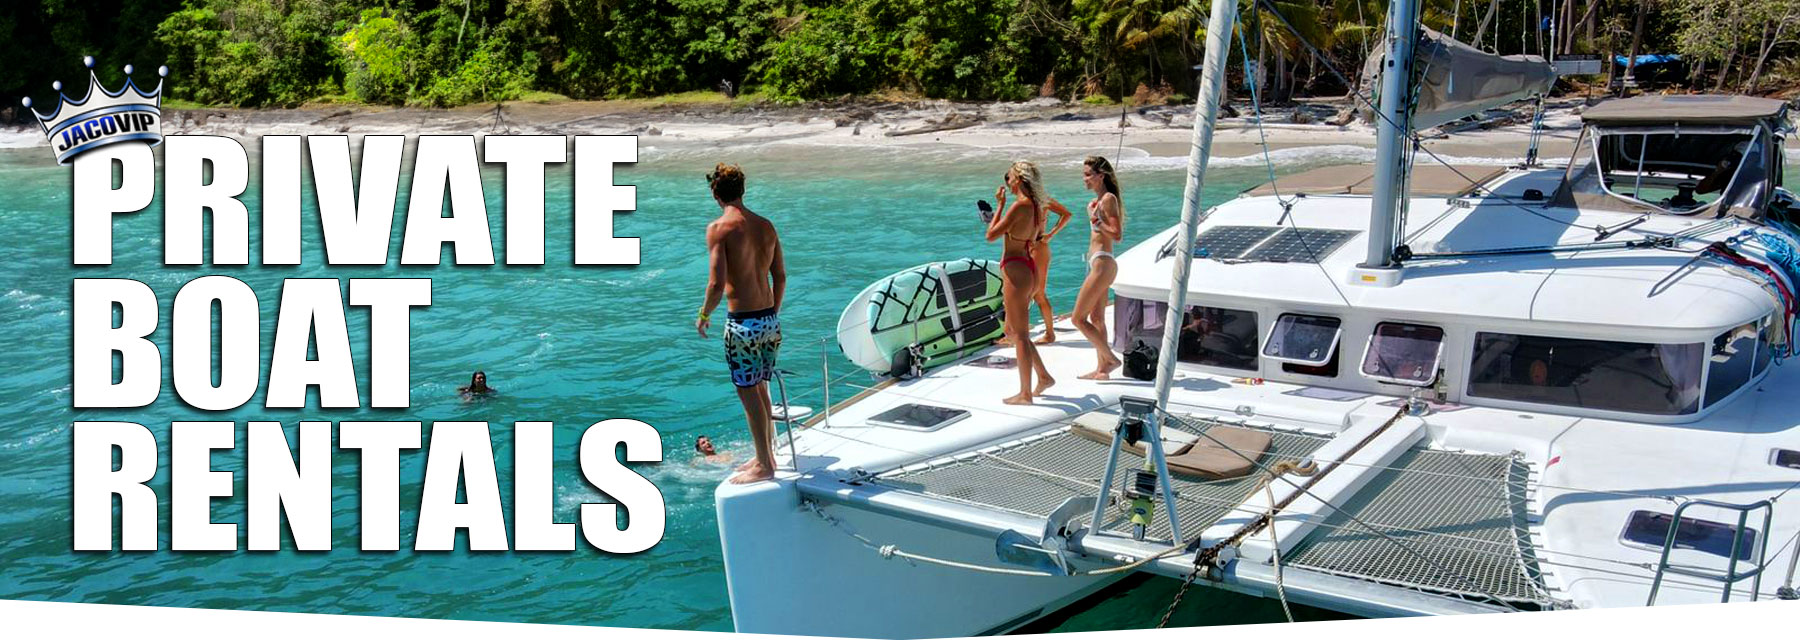 Jaco Beach Costa Rica private party boat rentals